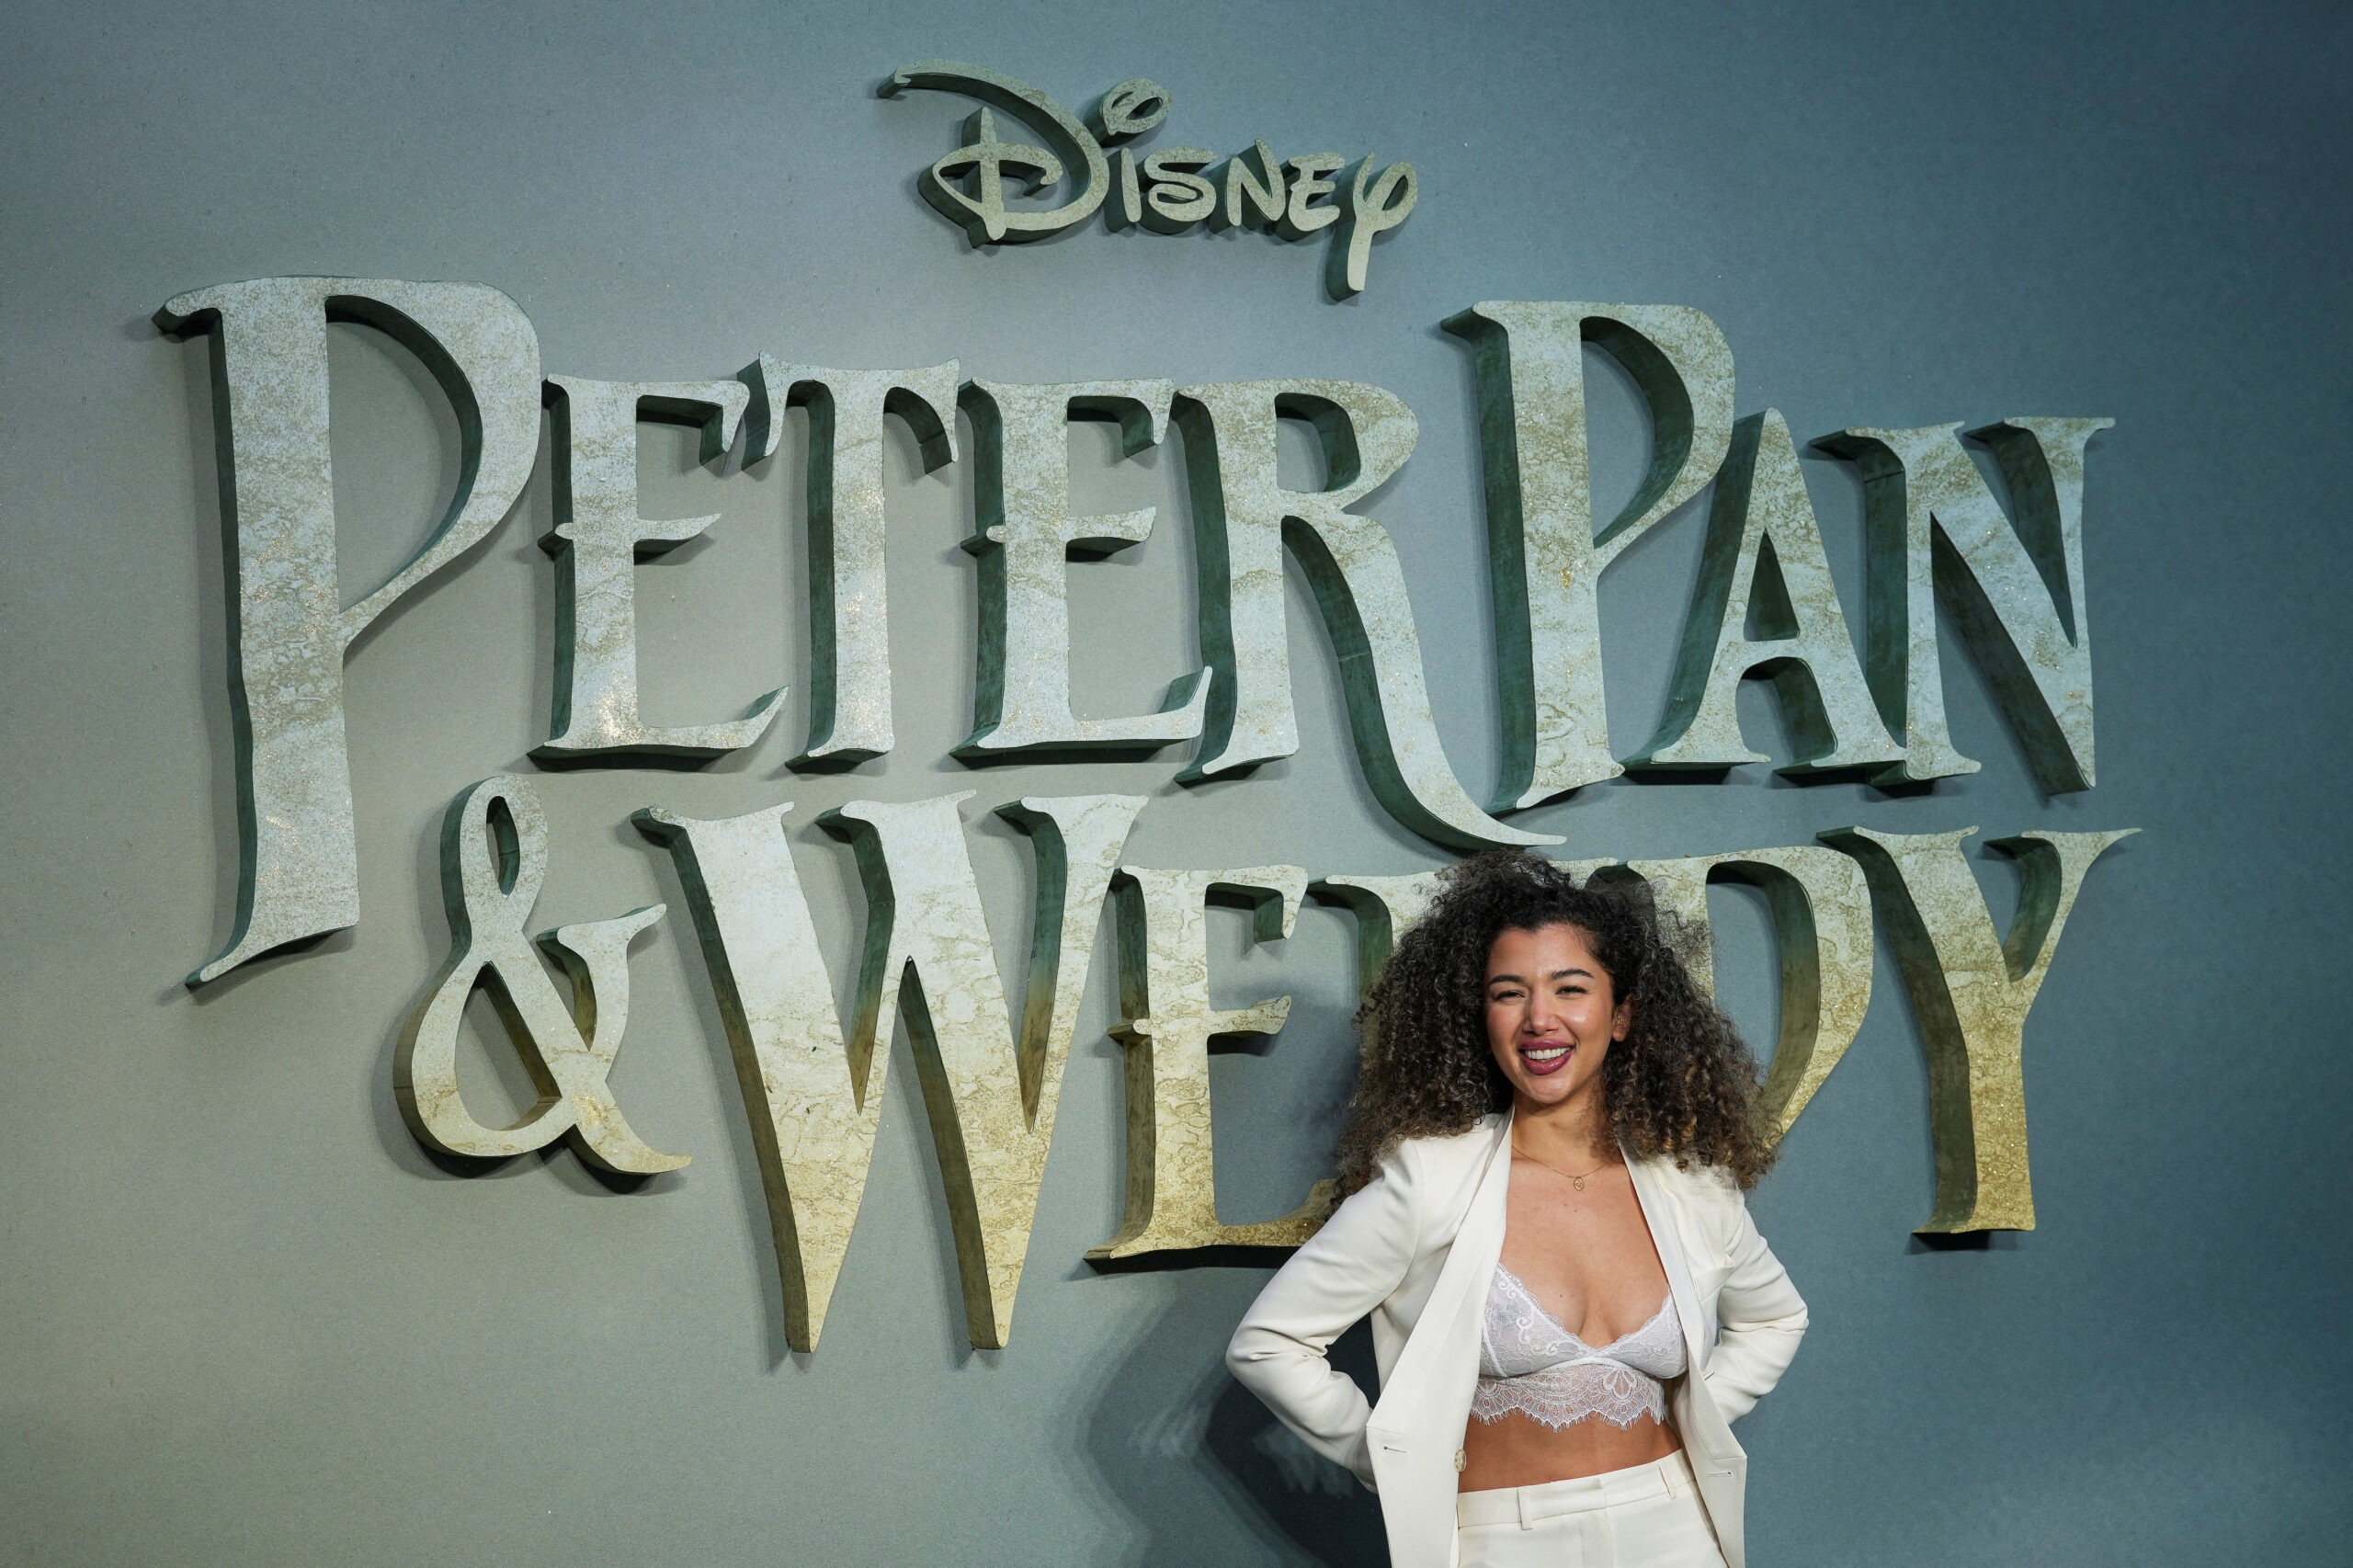 Cast member Yara Shahidi attends the world premiere of the film 'Peter Pan and Wendy' in London, Britain April 20, 2023. REUTERS/Maja Smiejkowska